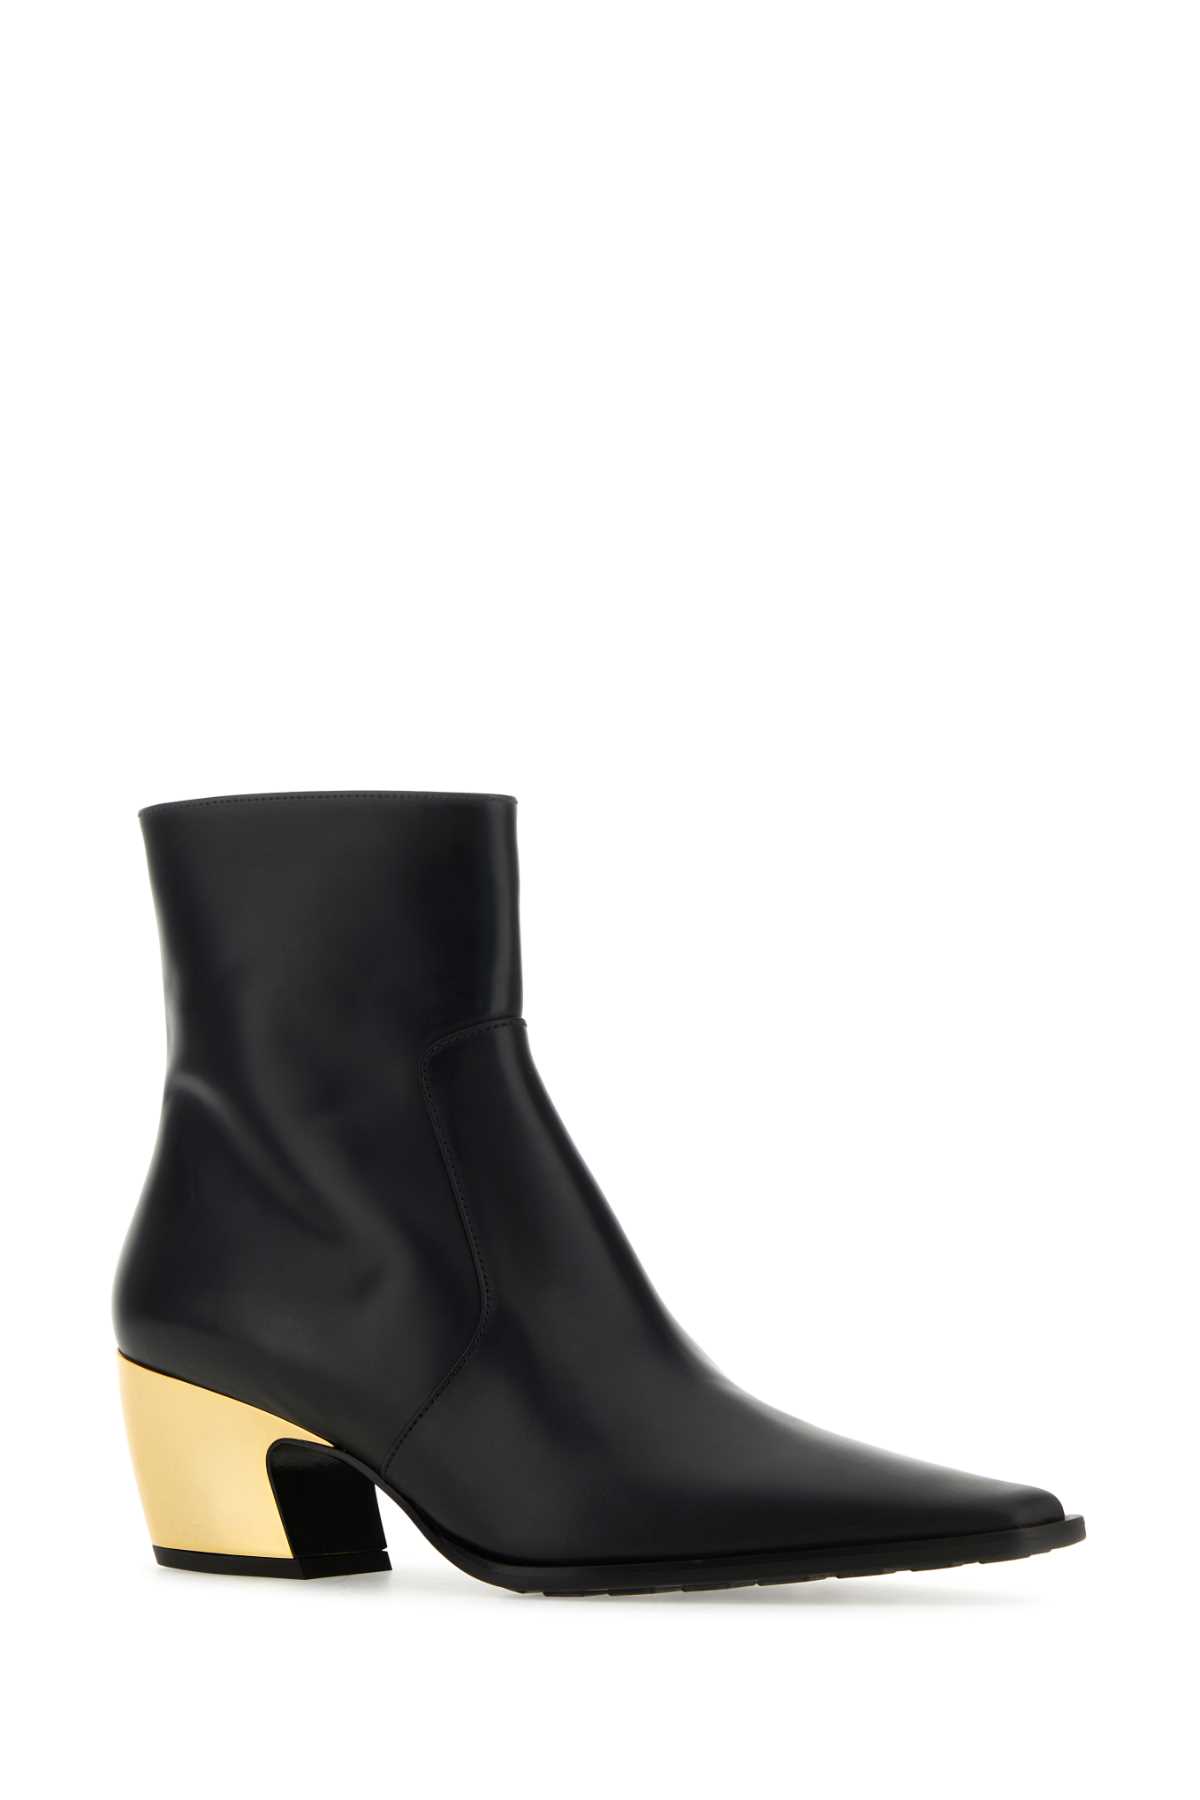 Bottega Veneta Black Leather Tex Ankle Boots In Blackgold